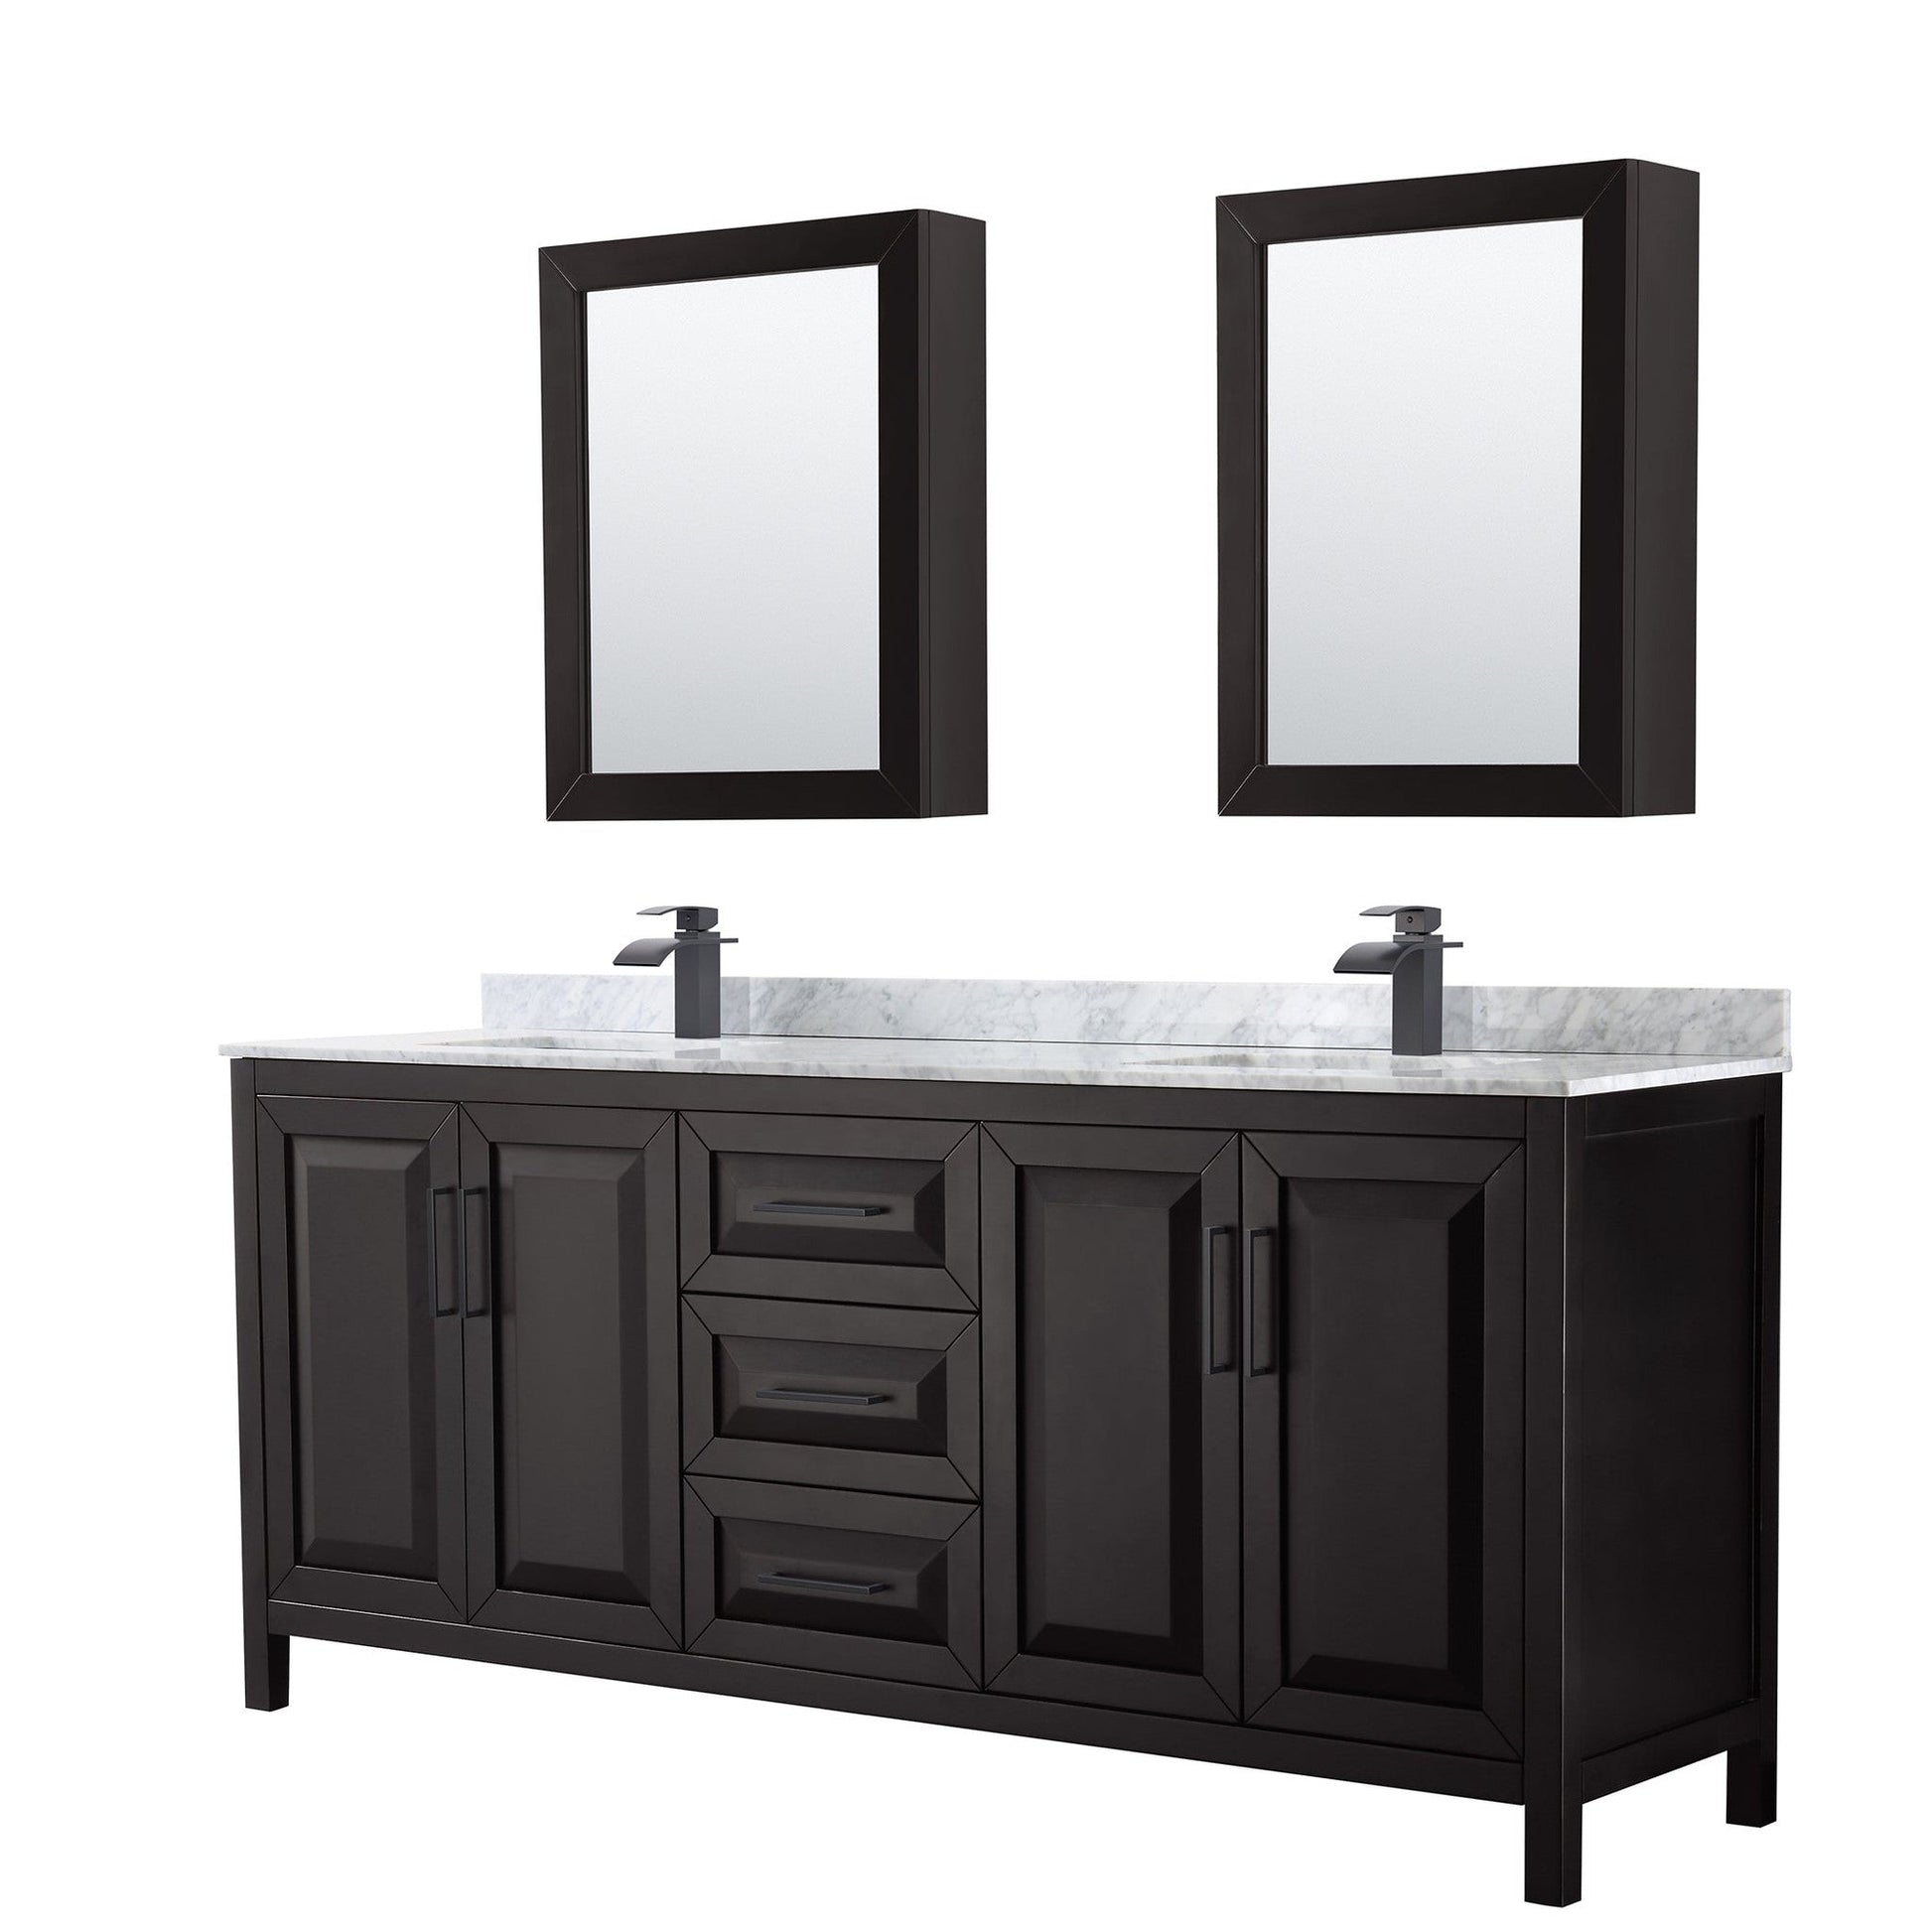 Daria 80" Double Bathroom Vanity in Dark Espresso, White Carrara Marble Countertop, Undermount Square Sinks, Matte Black Trim, Medicine Cabinets